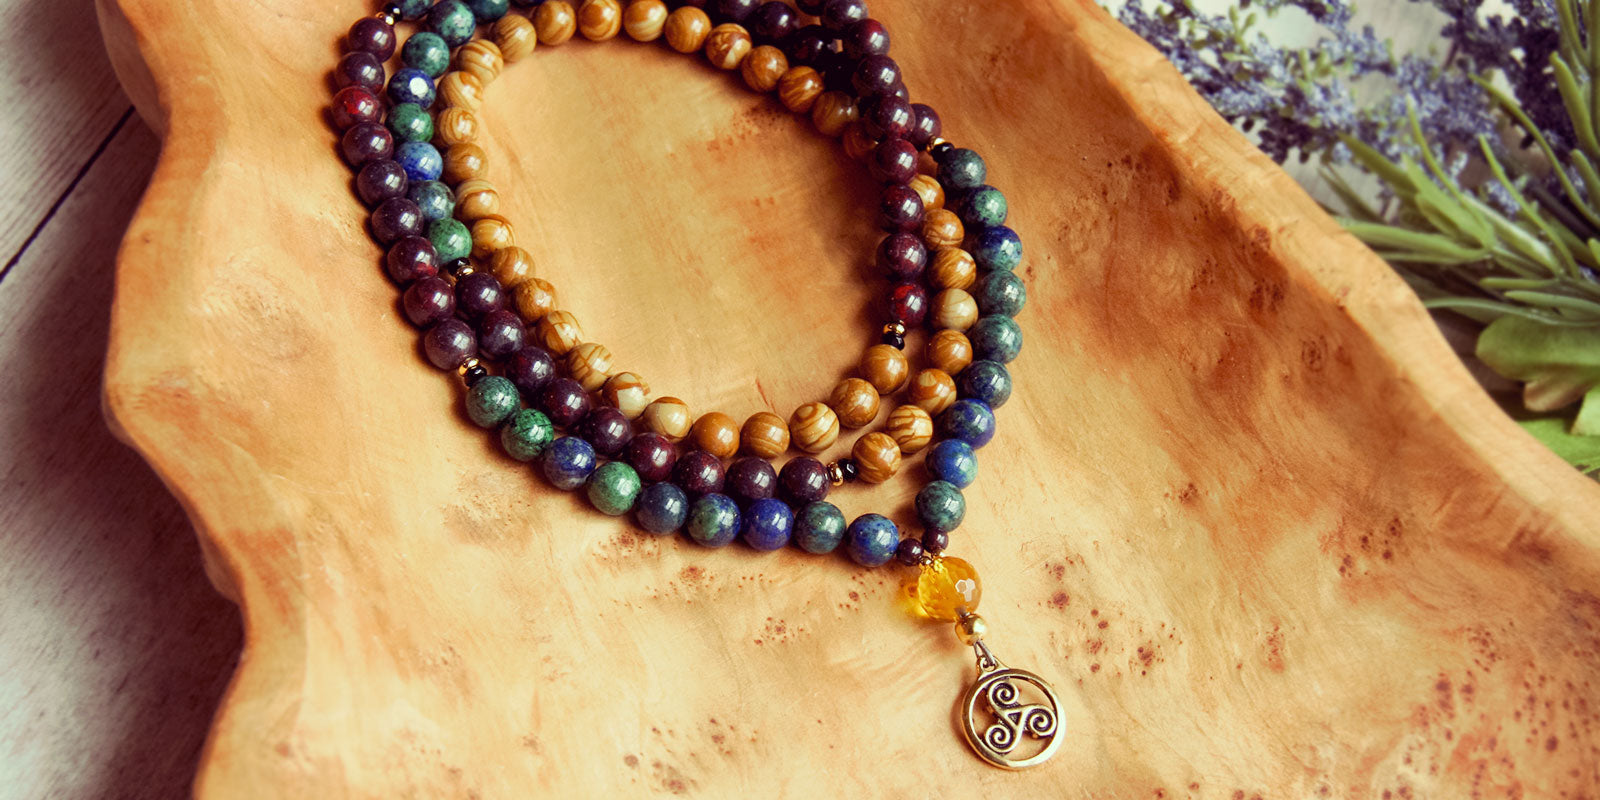 Mala Beads In Meditation: The Power Of Mala Beads In Meditation